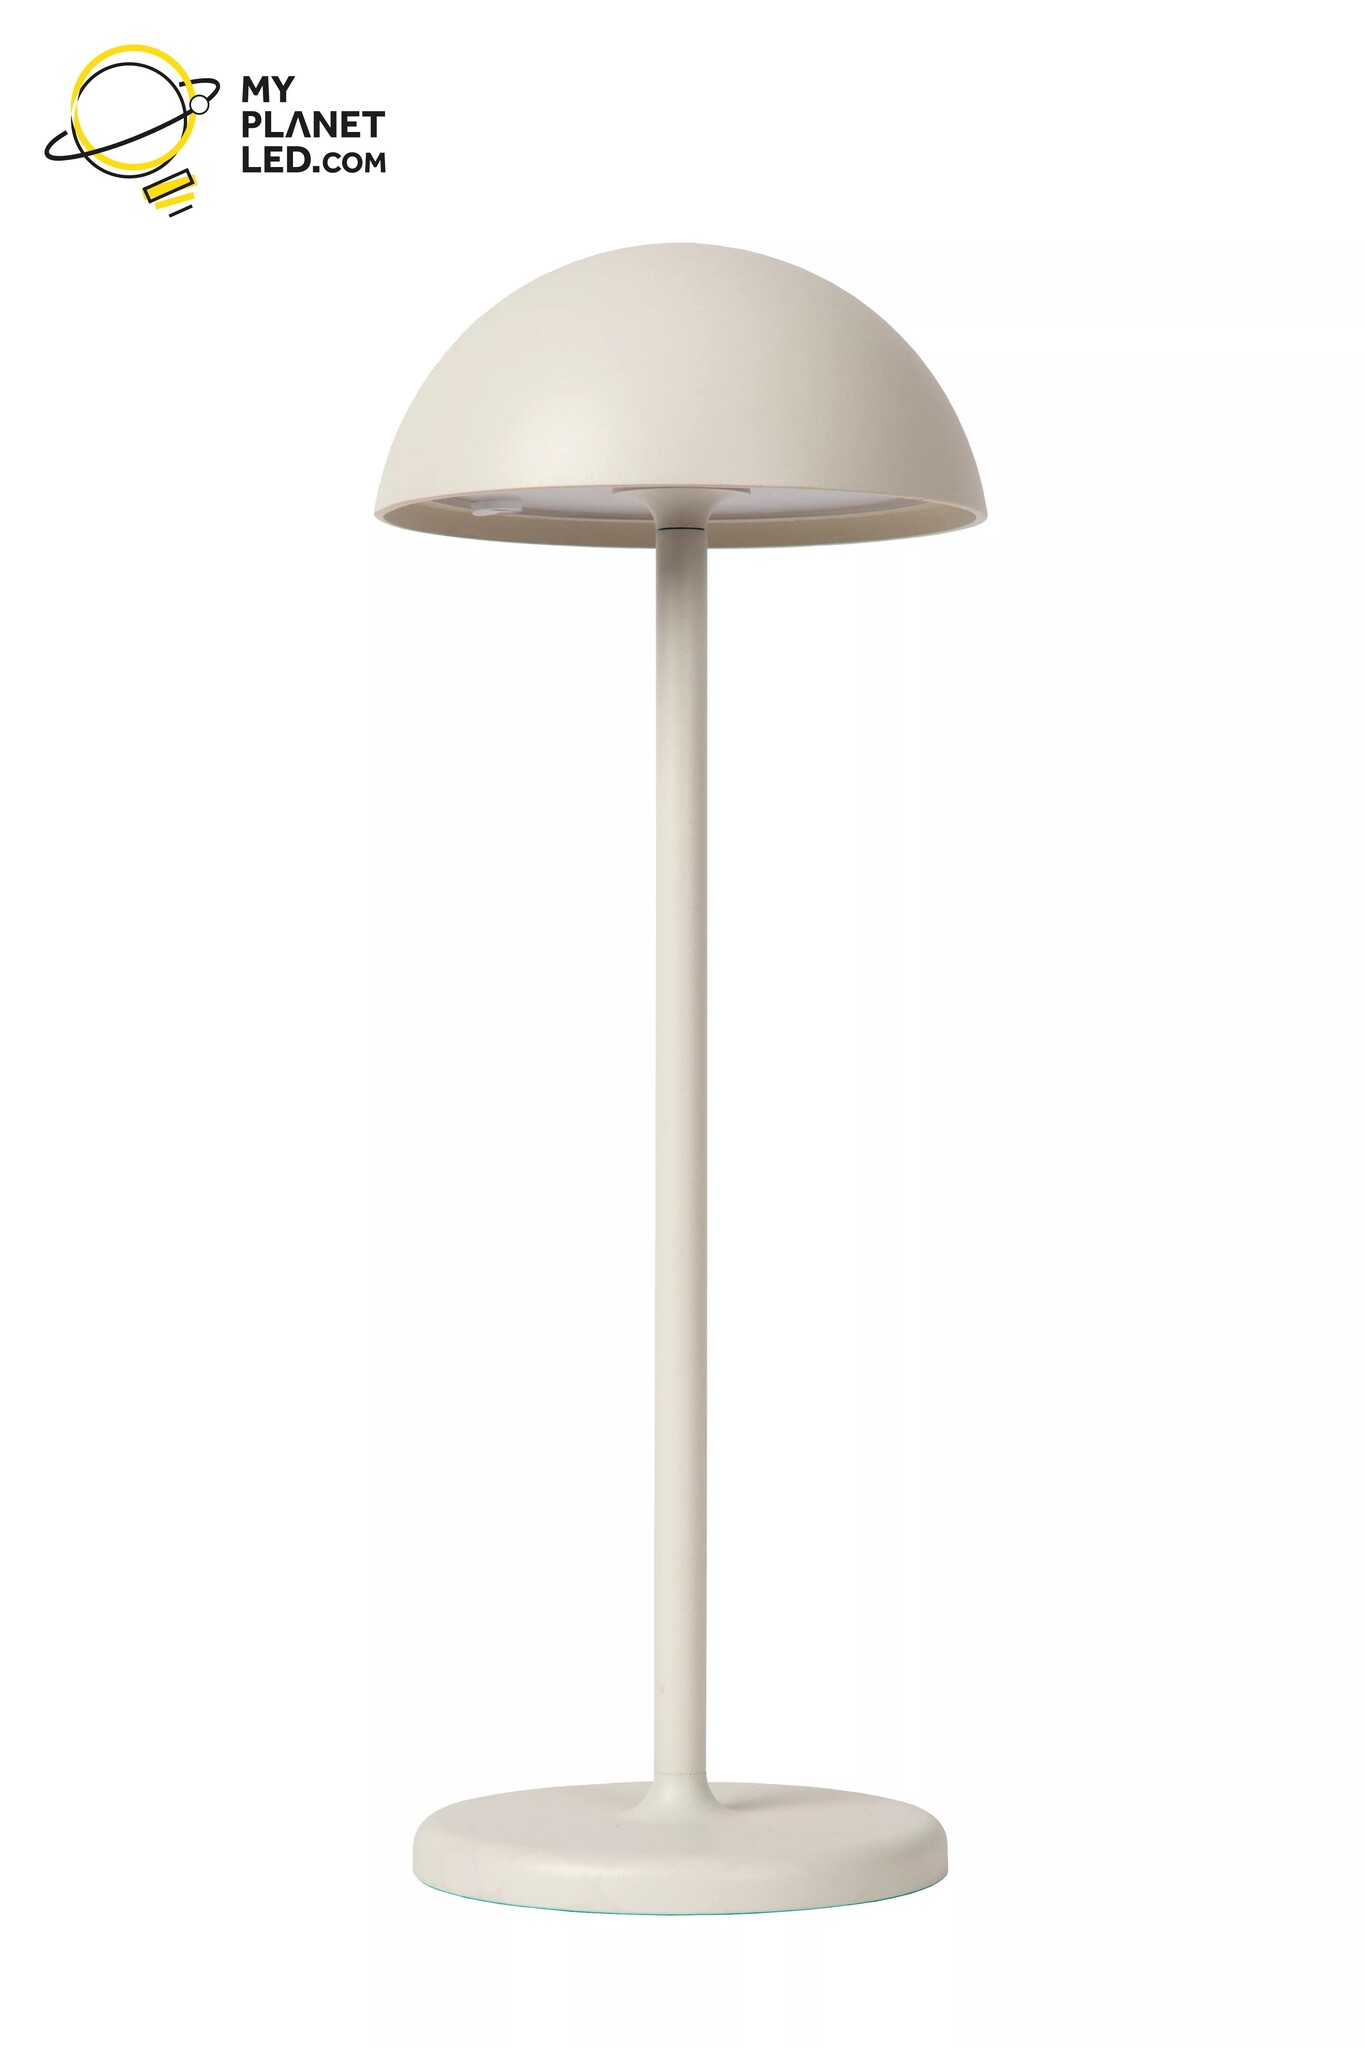  Lámpara de mesa inalámbrica, lámpara inalámbrica con